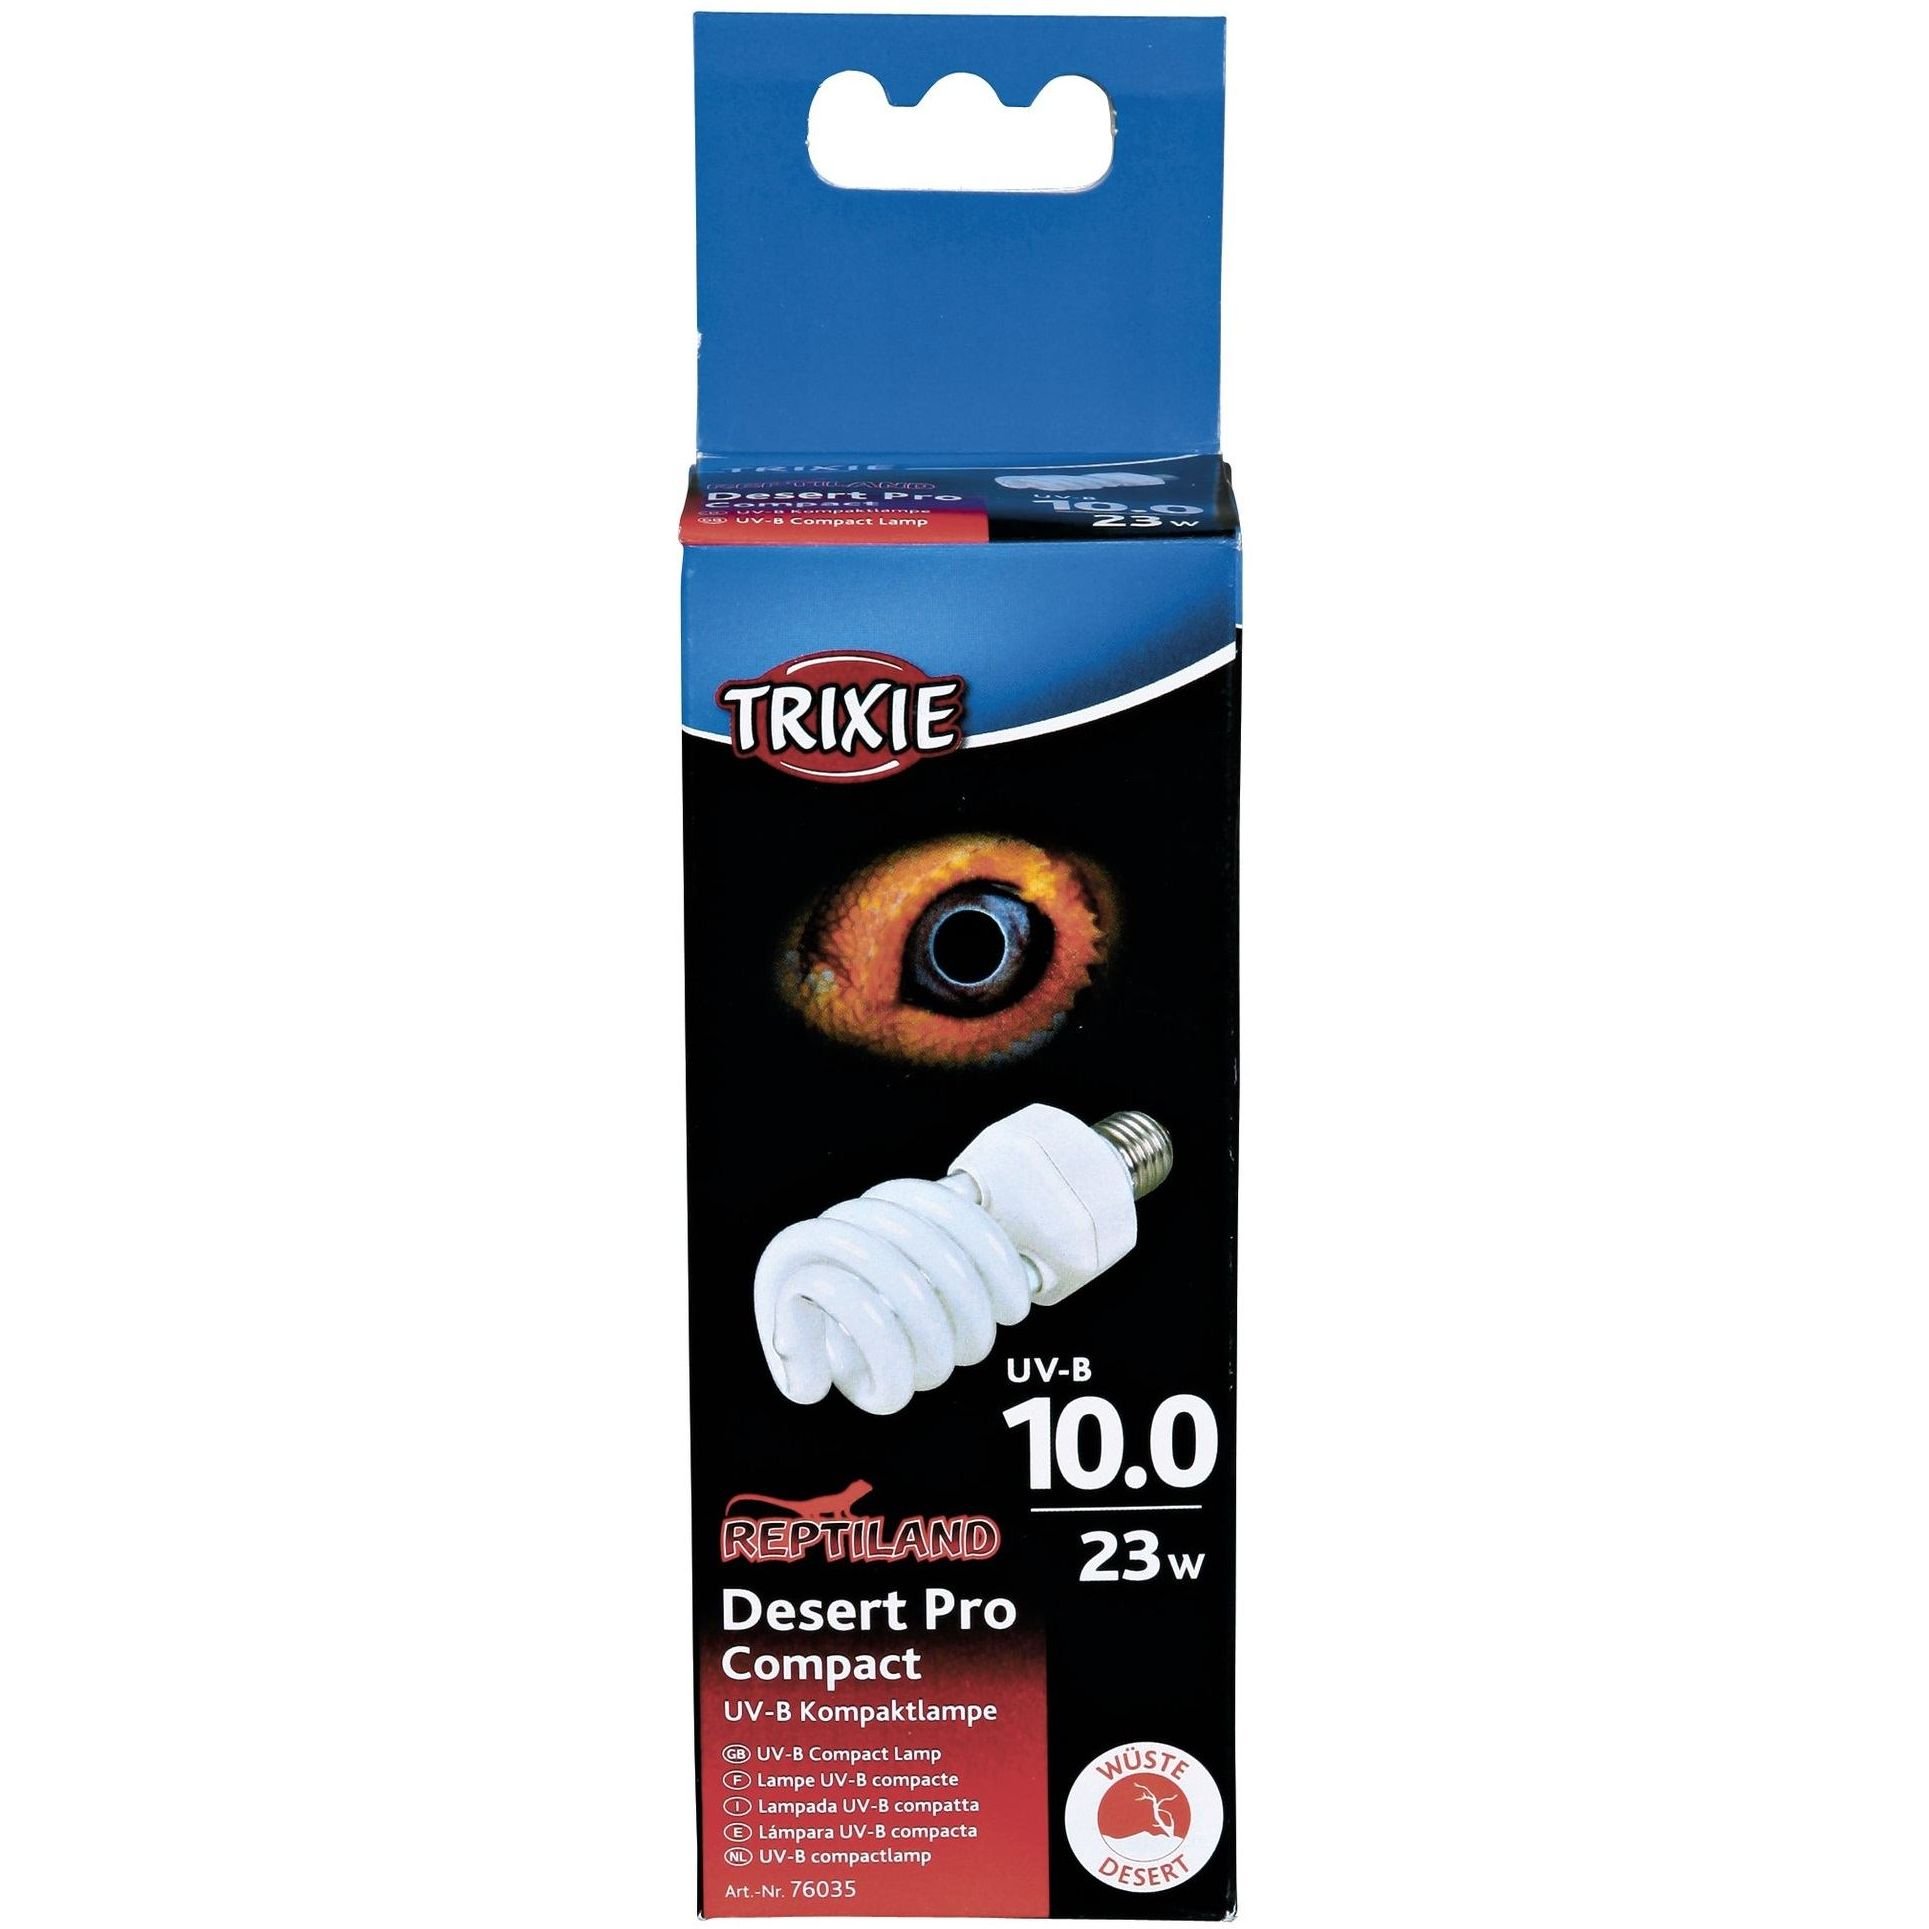 Лампа Trixie Desert Pro Compact 10.0 для террариума ультрафиолетовая, 23 W, E27 - фото 2